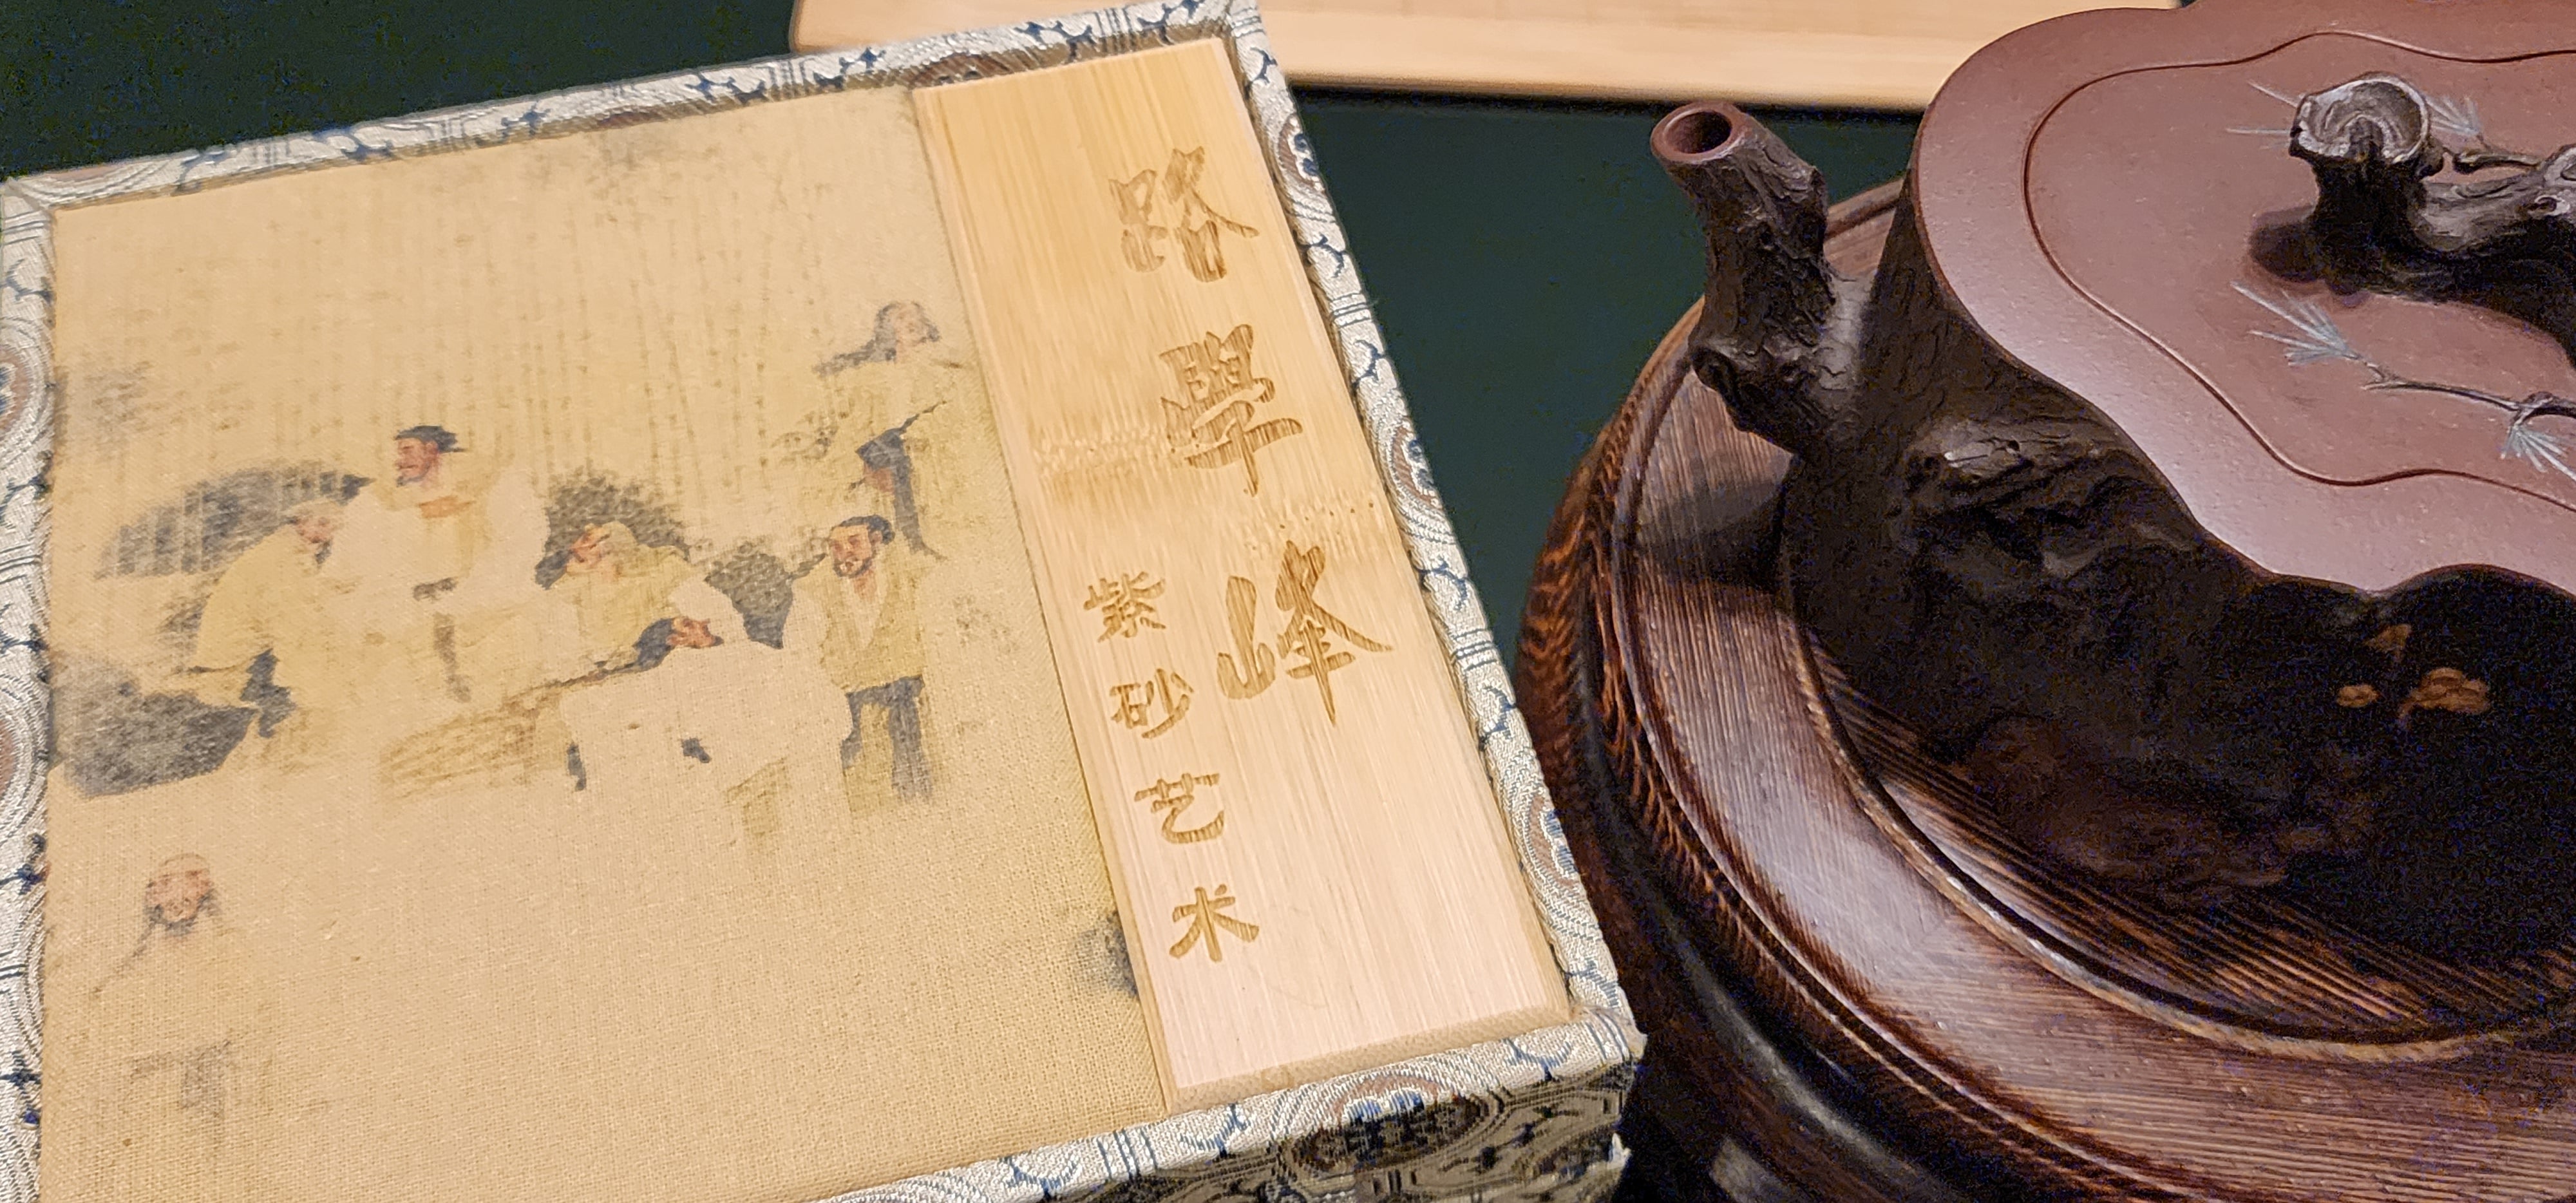 Lu San You 路三友, The Prized, ORIGINAL ACTUAL Gold Award Winning Work, by Senior Consummate Master Artist Lu Xue Feng 国家高级振兴技艺师~路学峰。